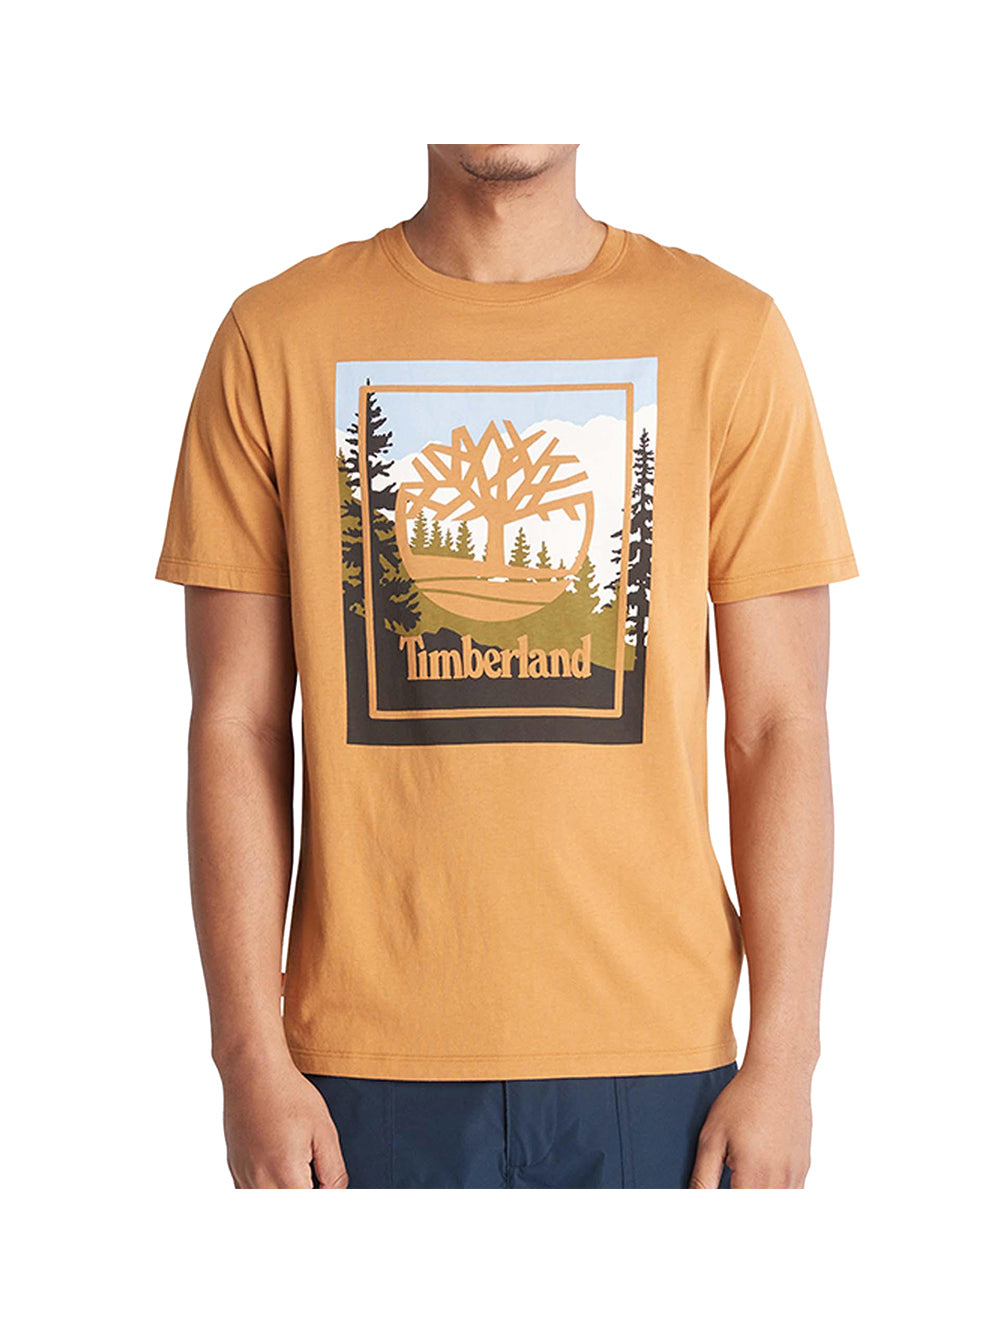 TIMBERLAND T-shirt Uomo Marrone con maxi stampa frontale WHEAT